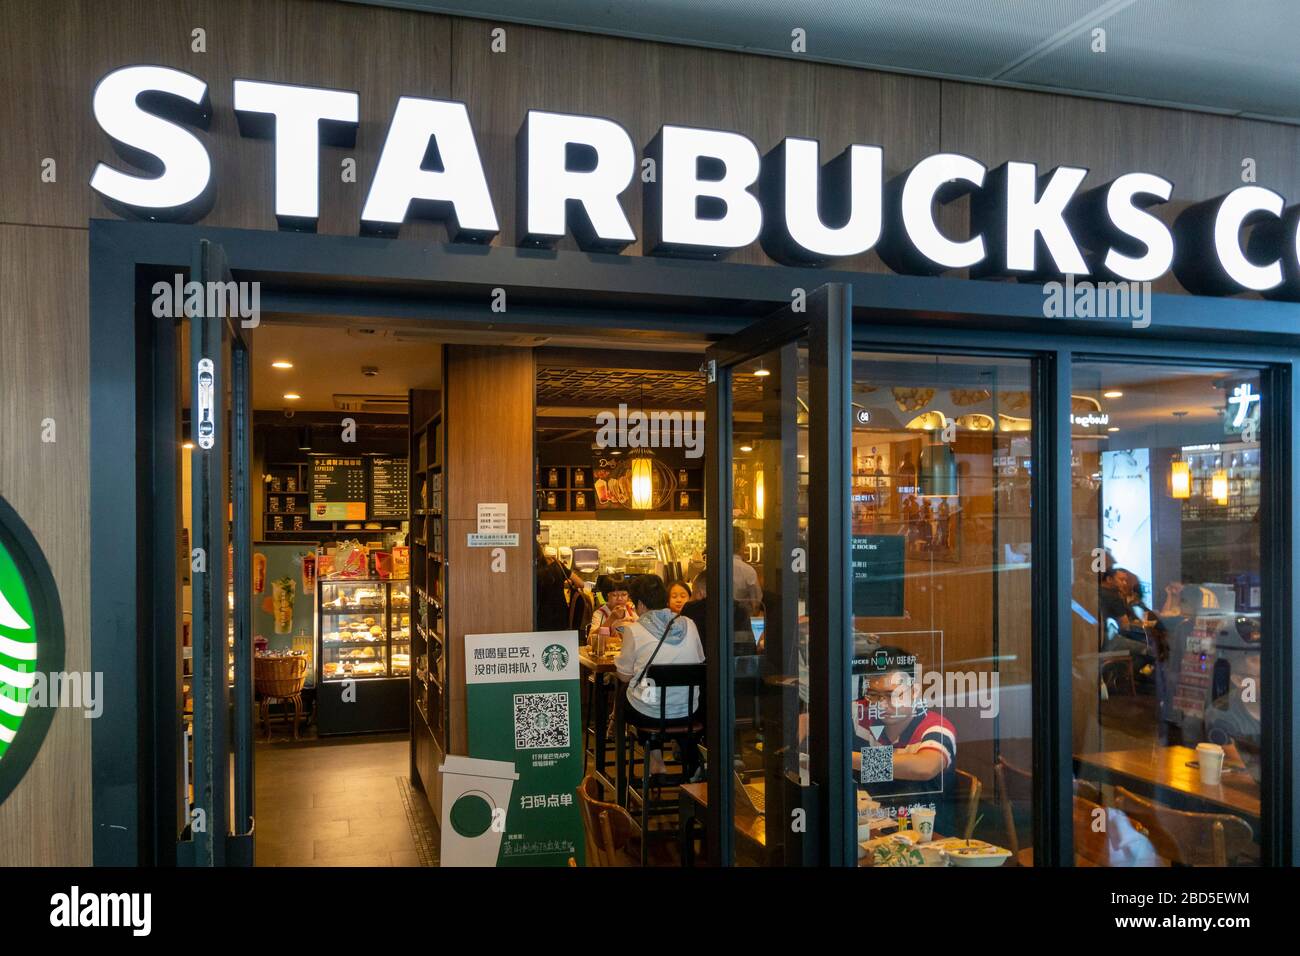 Starbucks outlet, Hangzhou airport, China Stock Photo